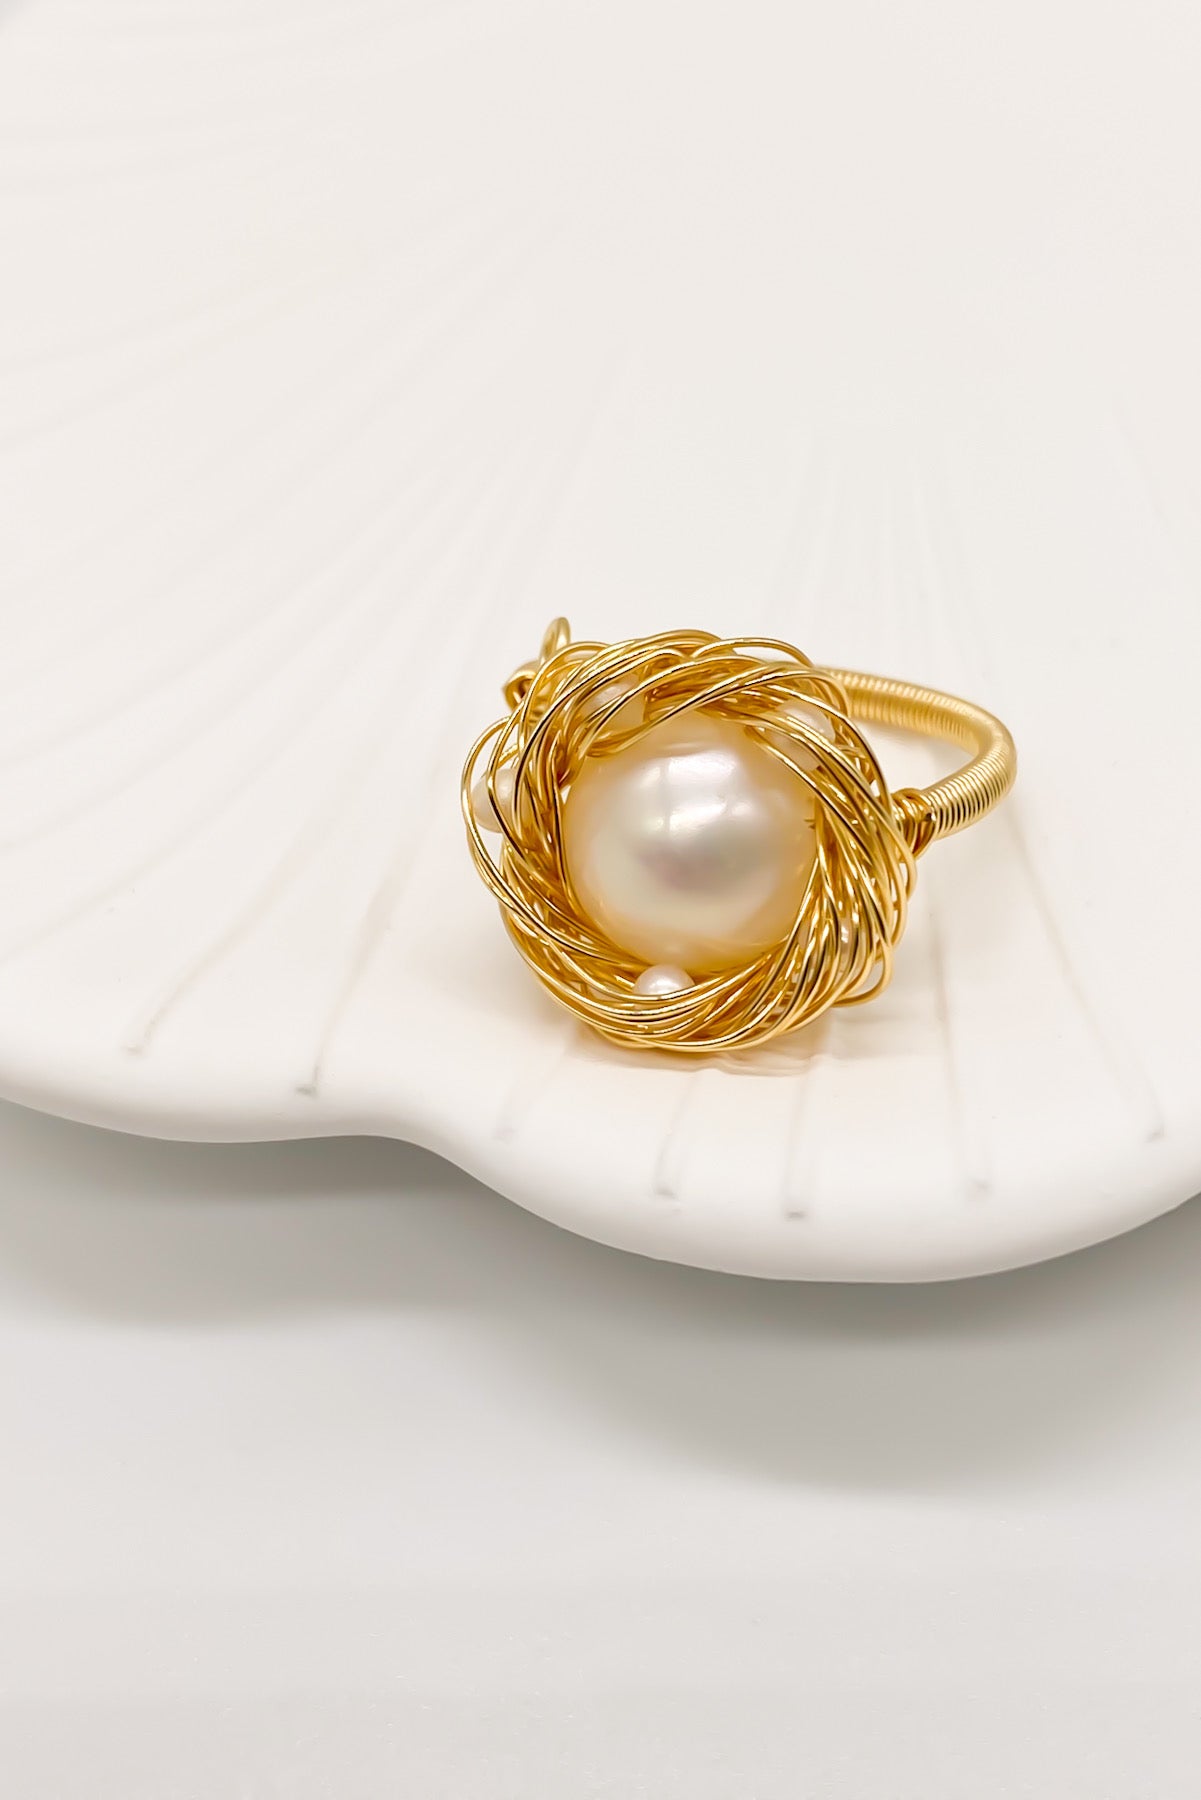 SKYE San Francisco Shop Chic Modern Elegant Classy Women Jewelry French Parisian Minimalist Irene Gold Freshwater Pearl Ring 6